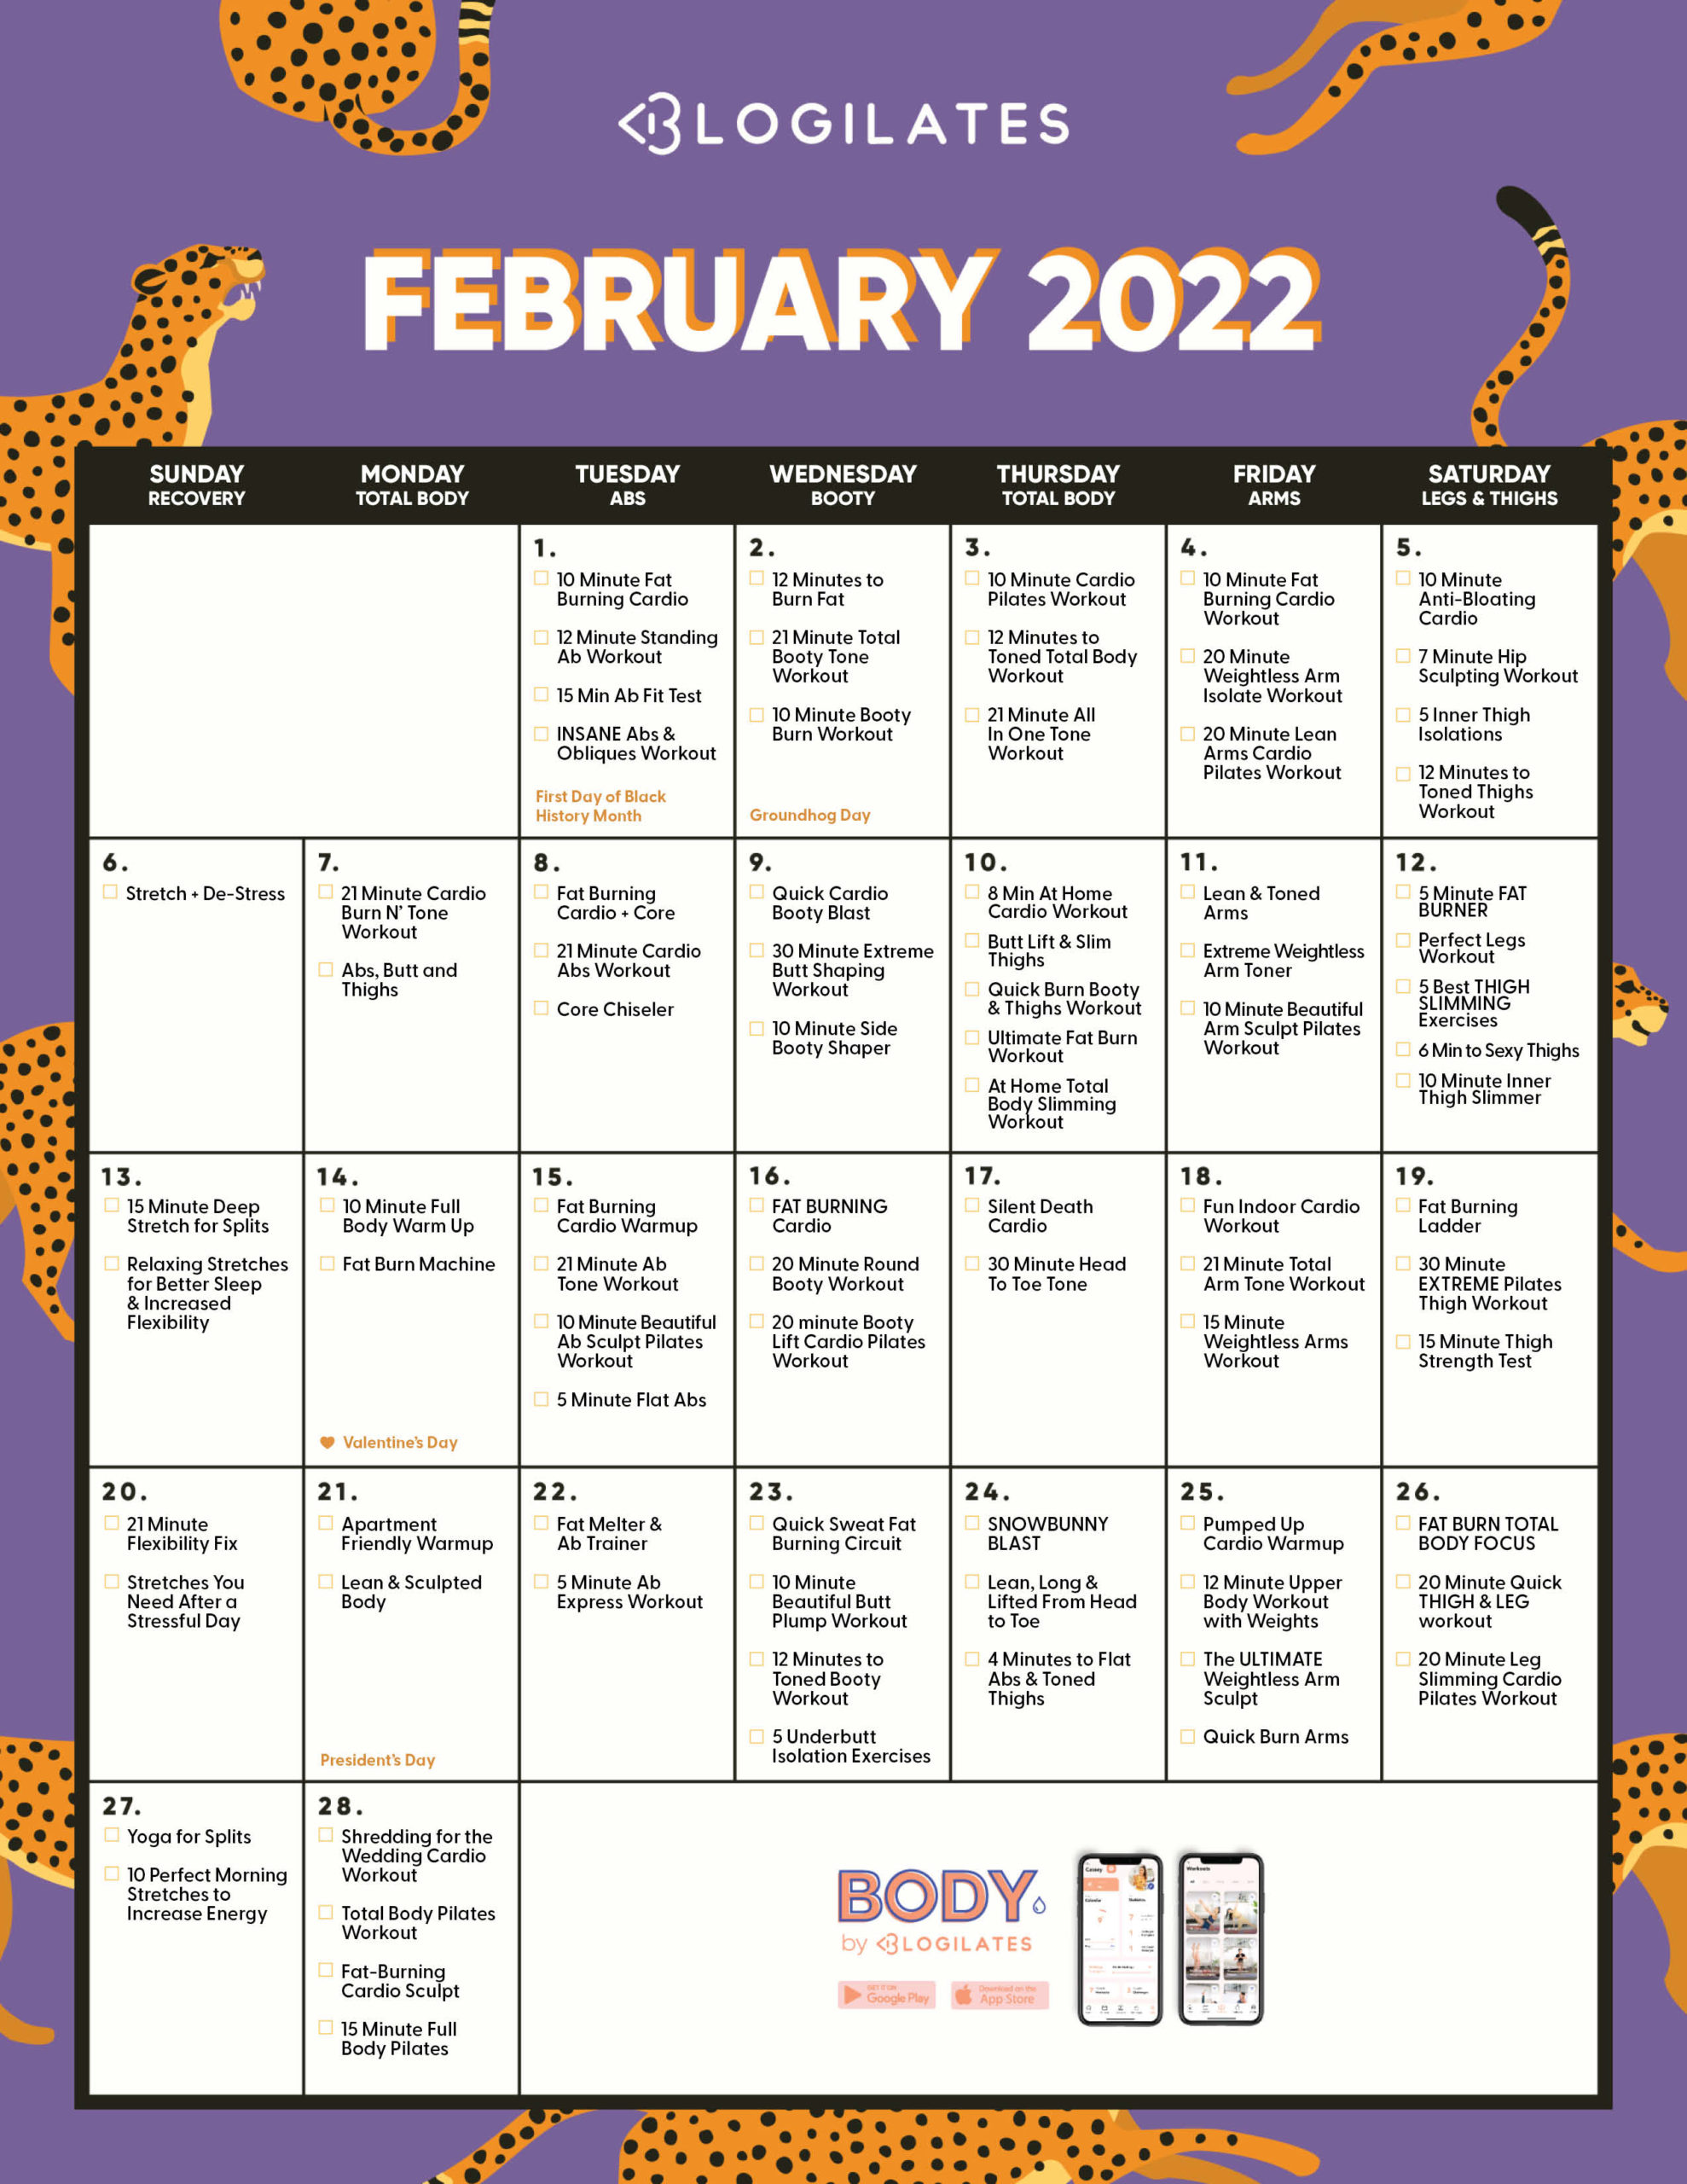 The Blogilates February 2022 Workout Calendar!